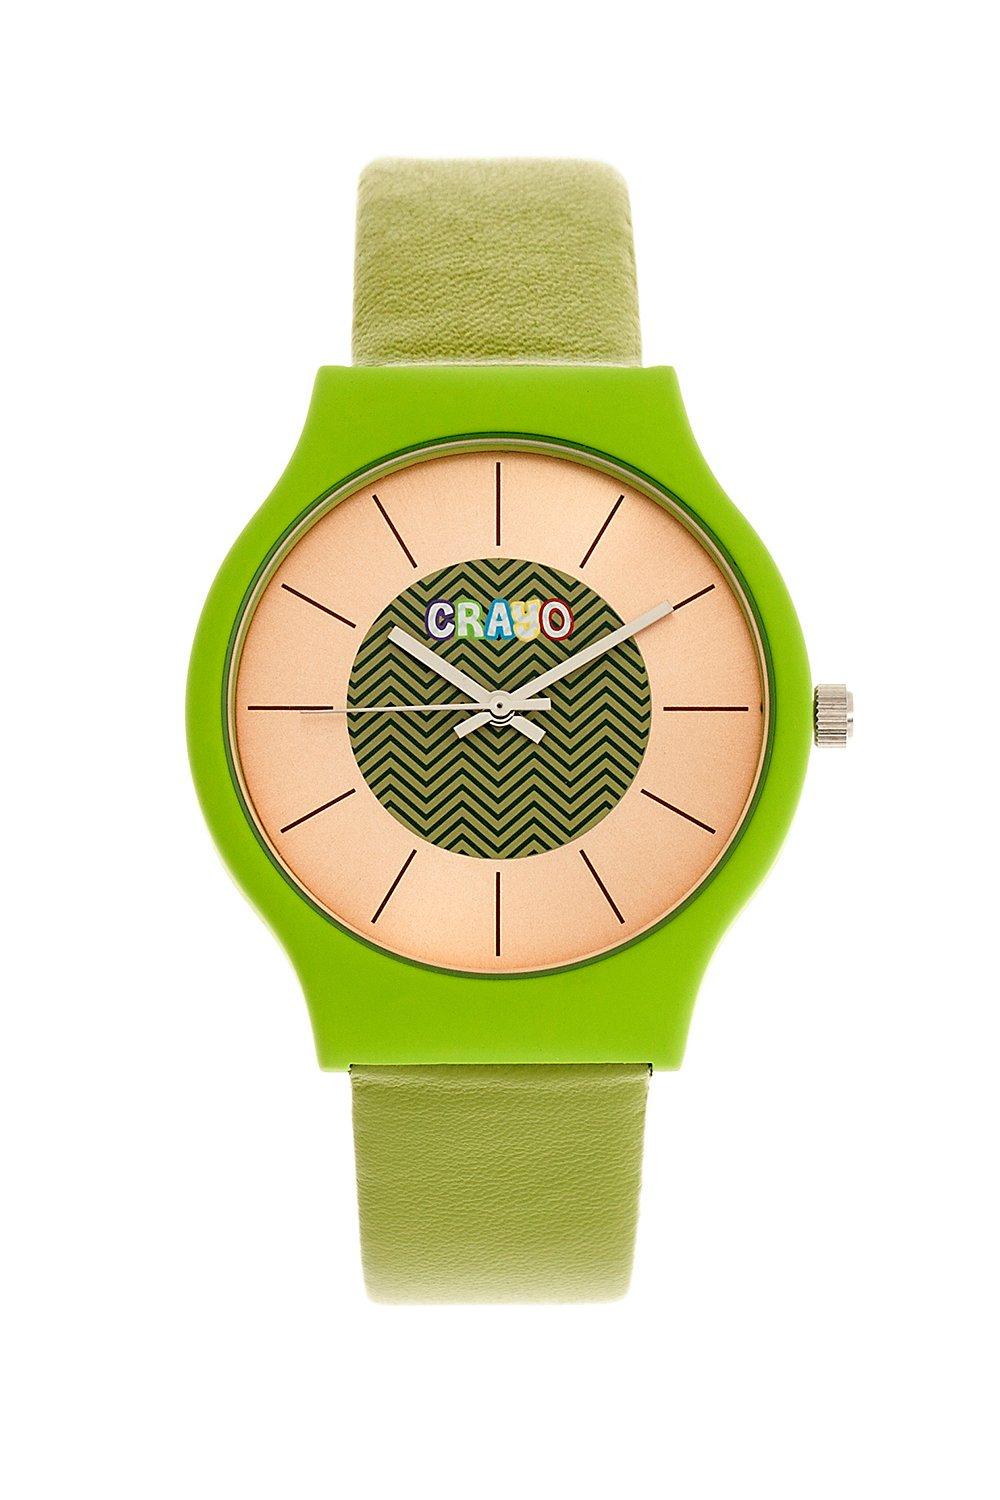 цена Часы унисекс Trinity Crayo, зеленый